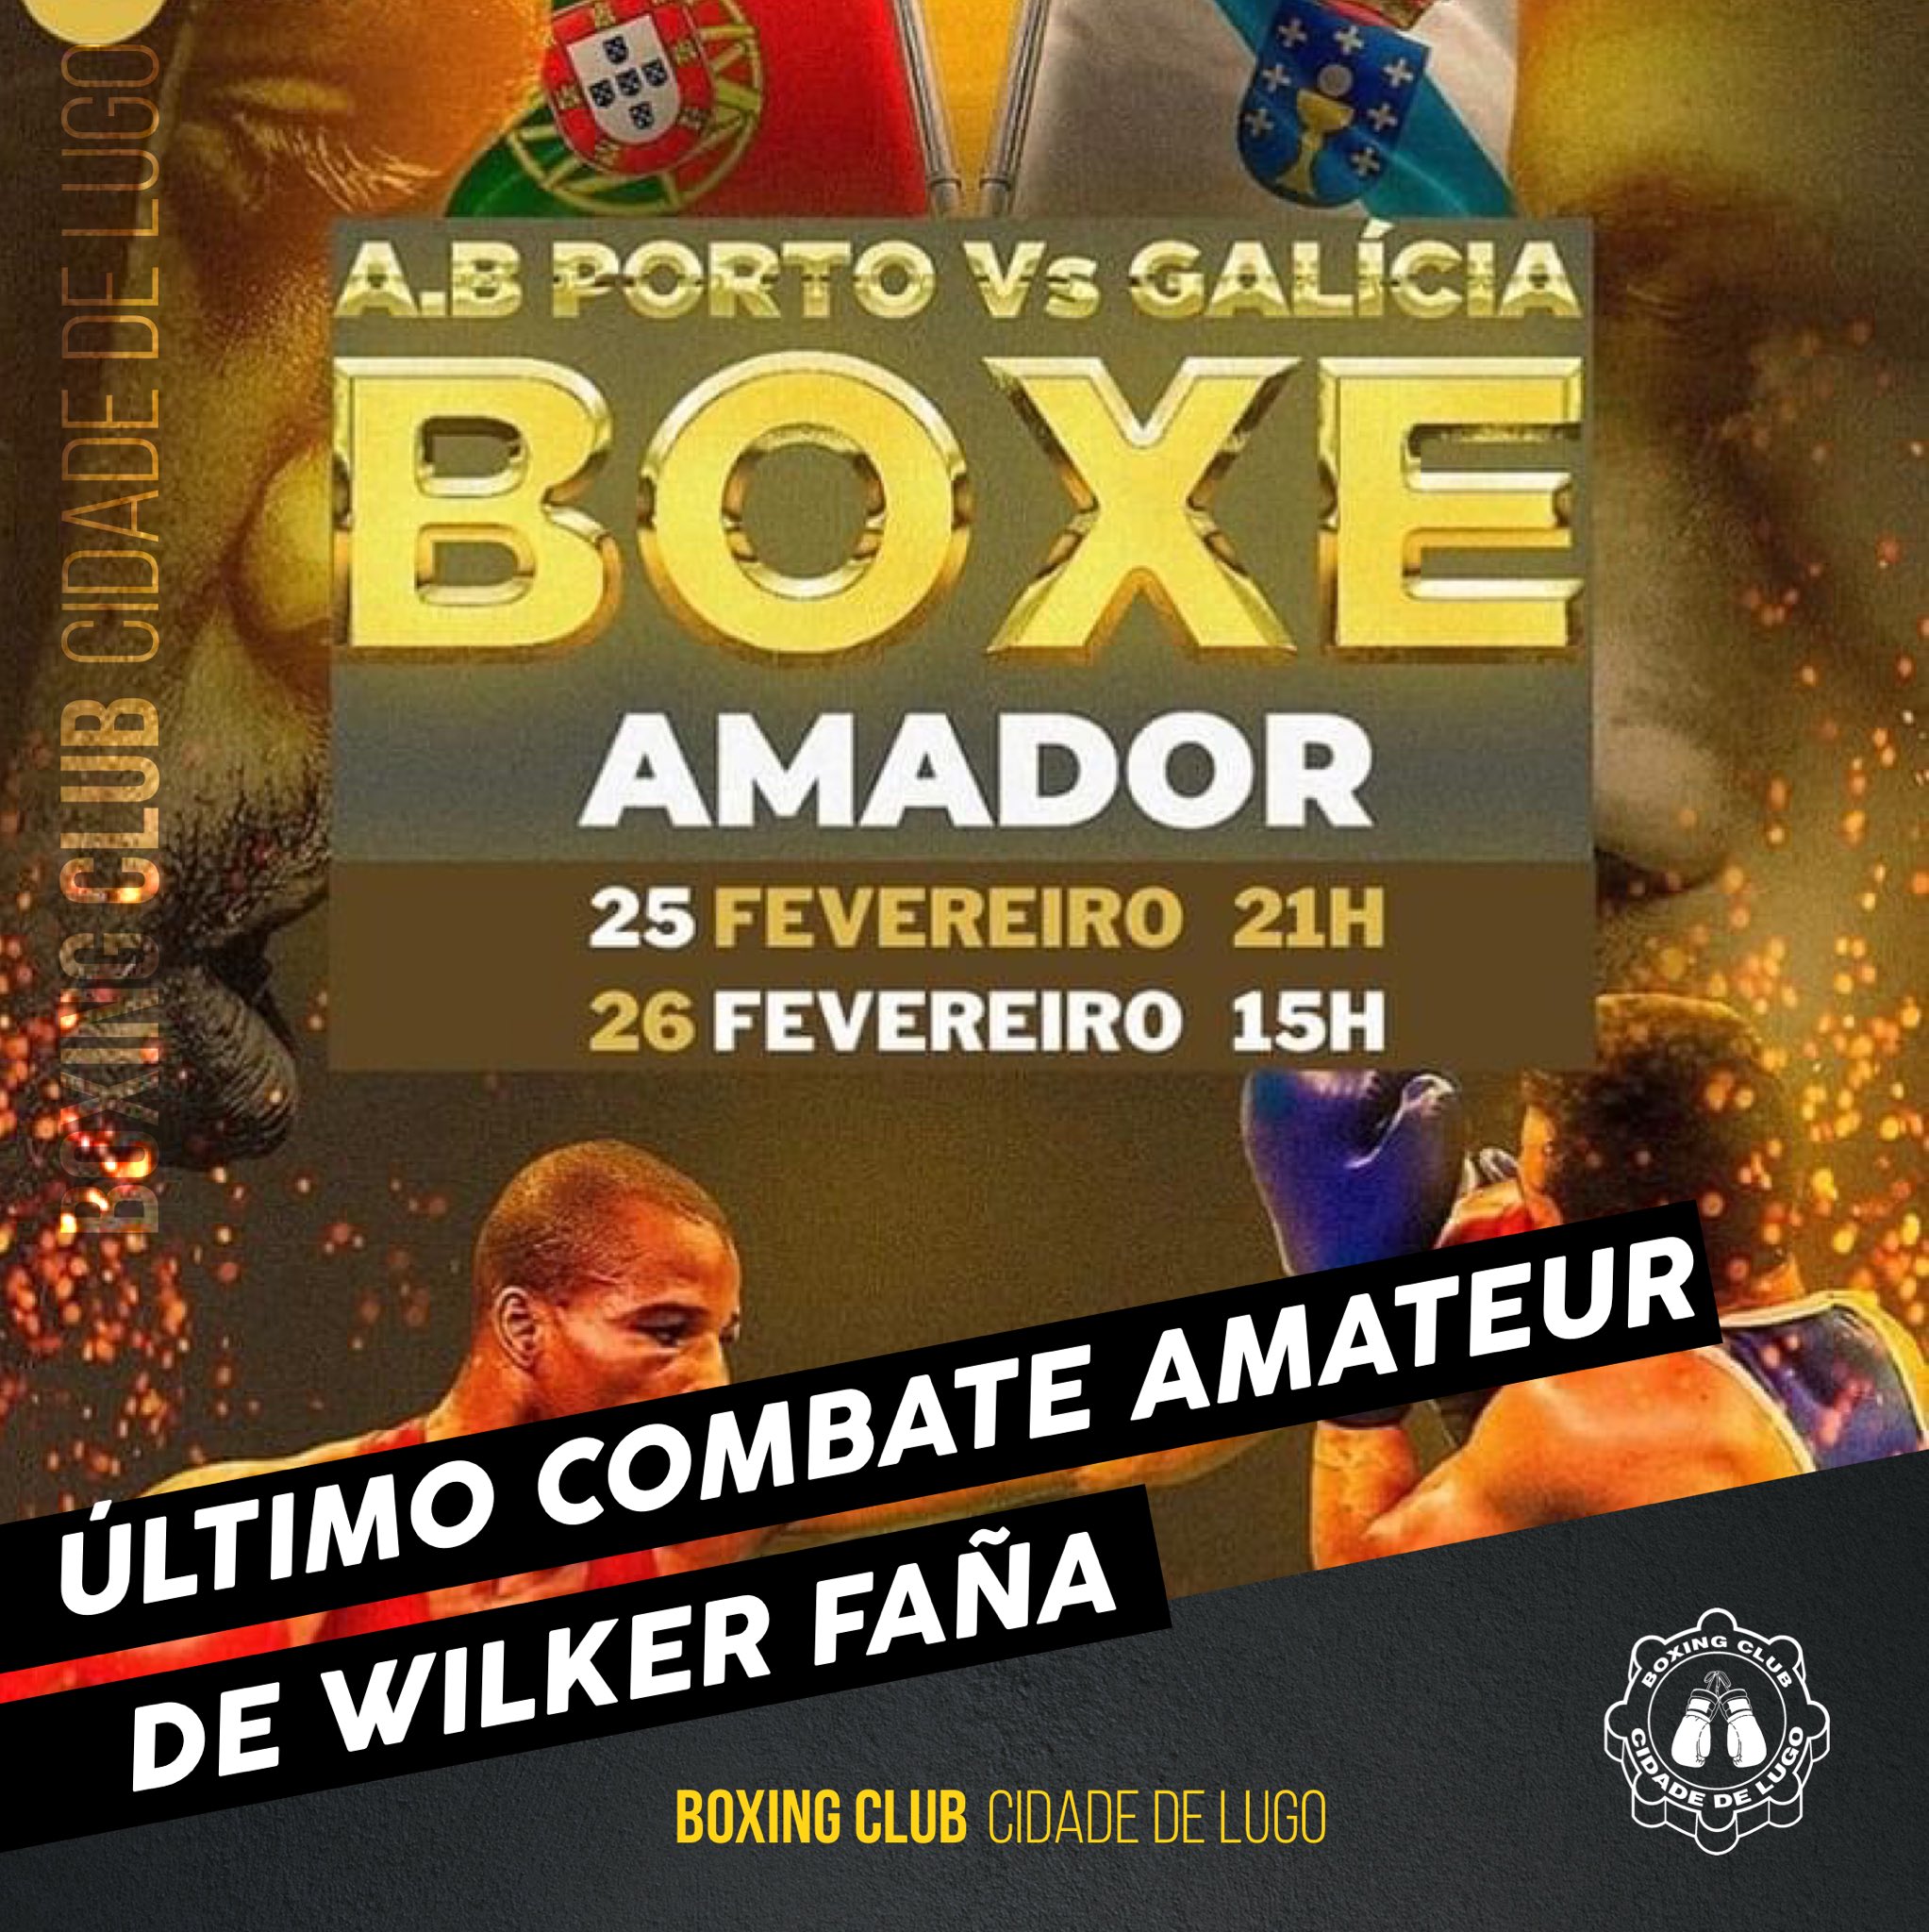 choque Están familiarizados Dedos de los pies Boxing Club Cidade de Lugo (@BoxingClubLugo) / Twitter